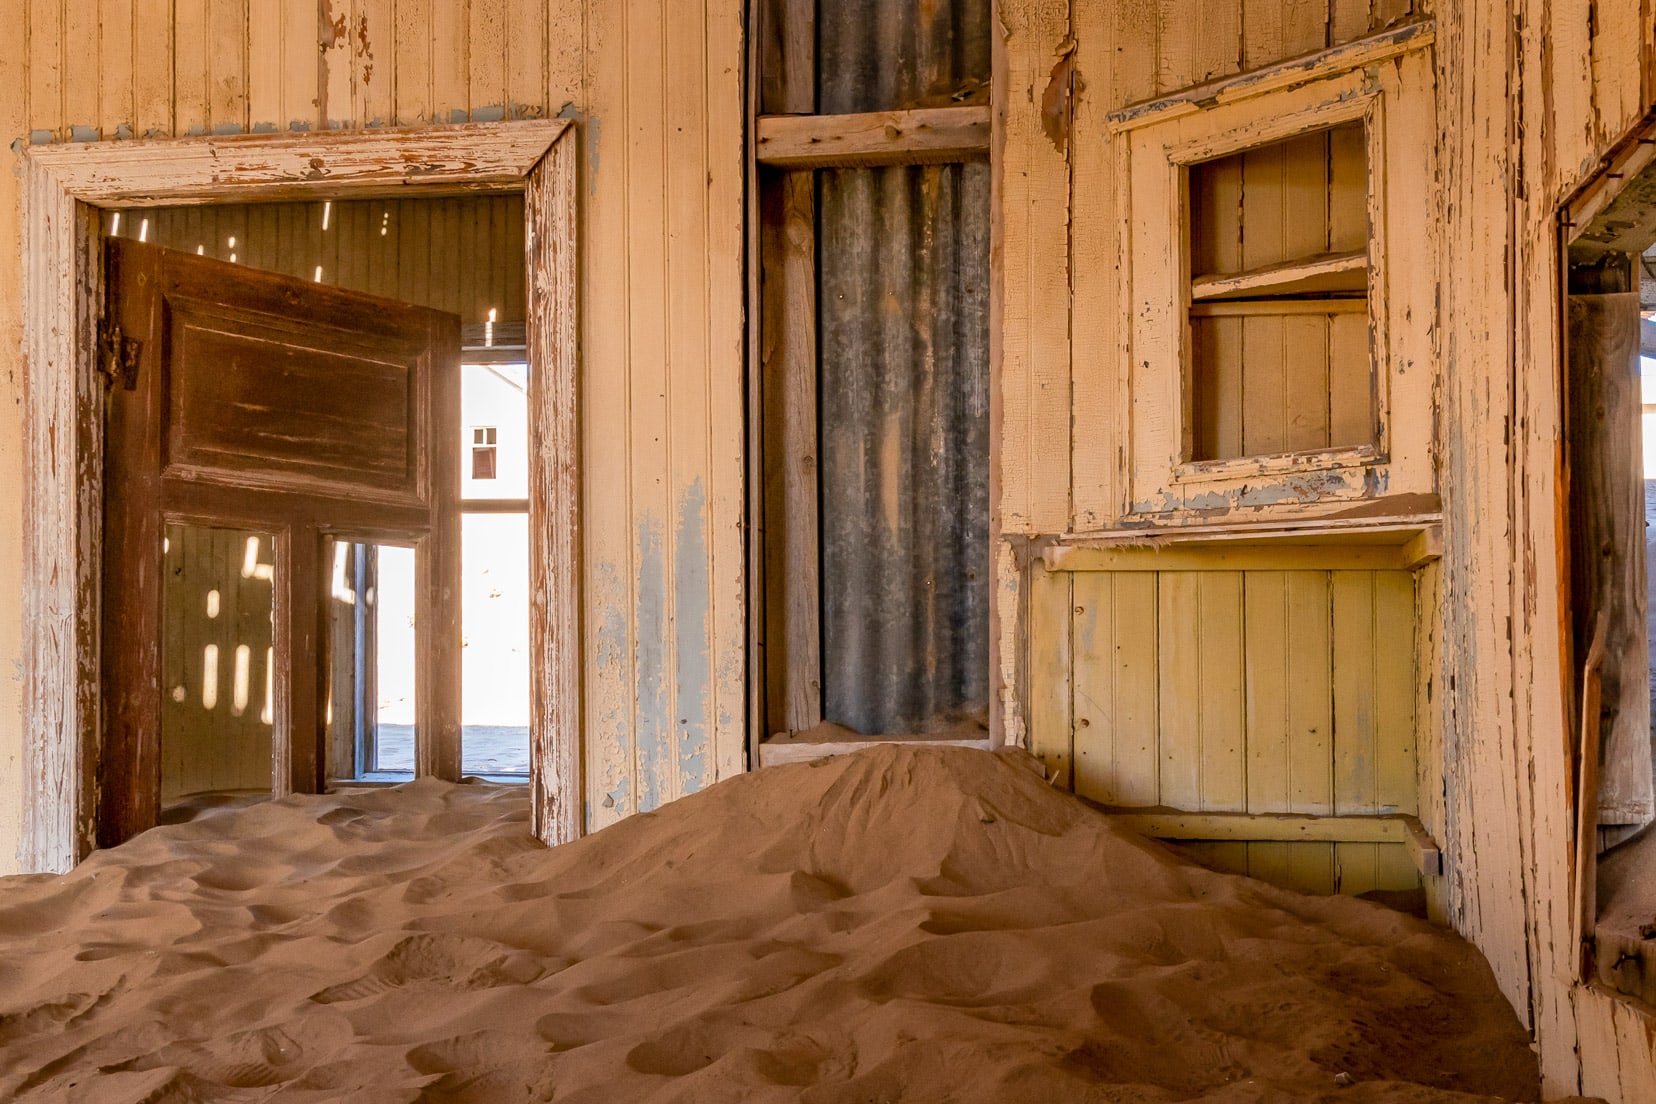 Room in Kolmanskop ghost town filled with sand 